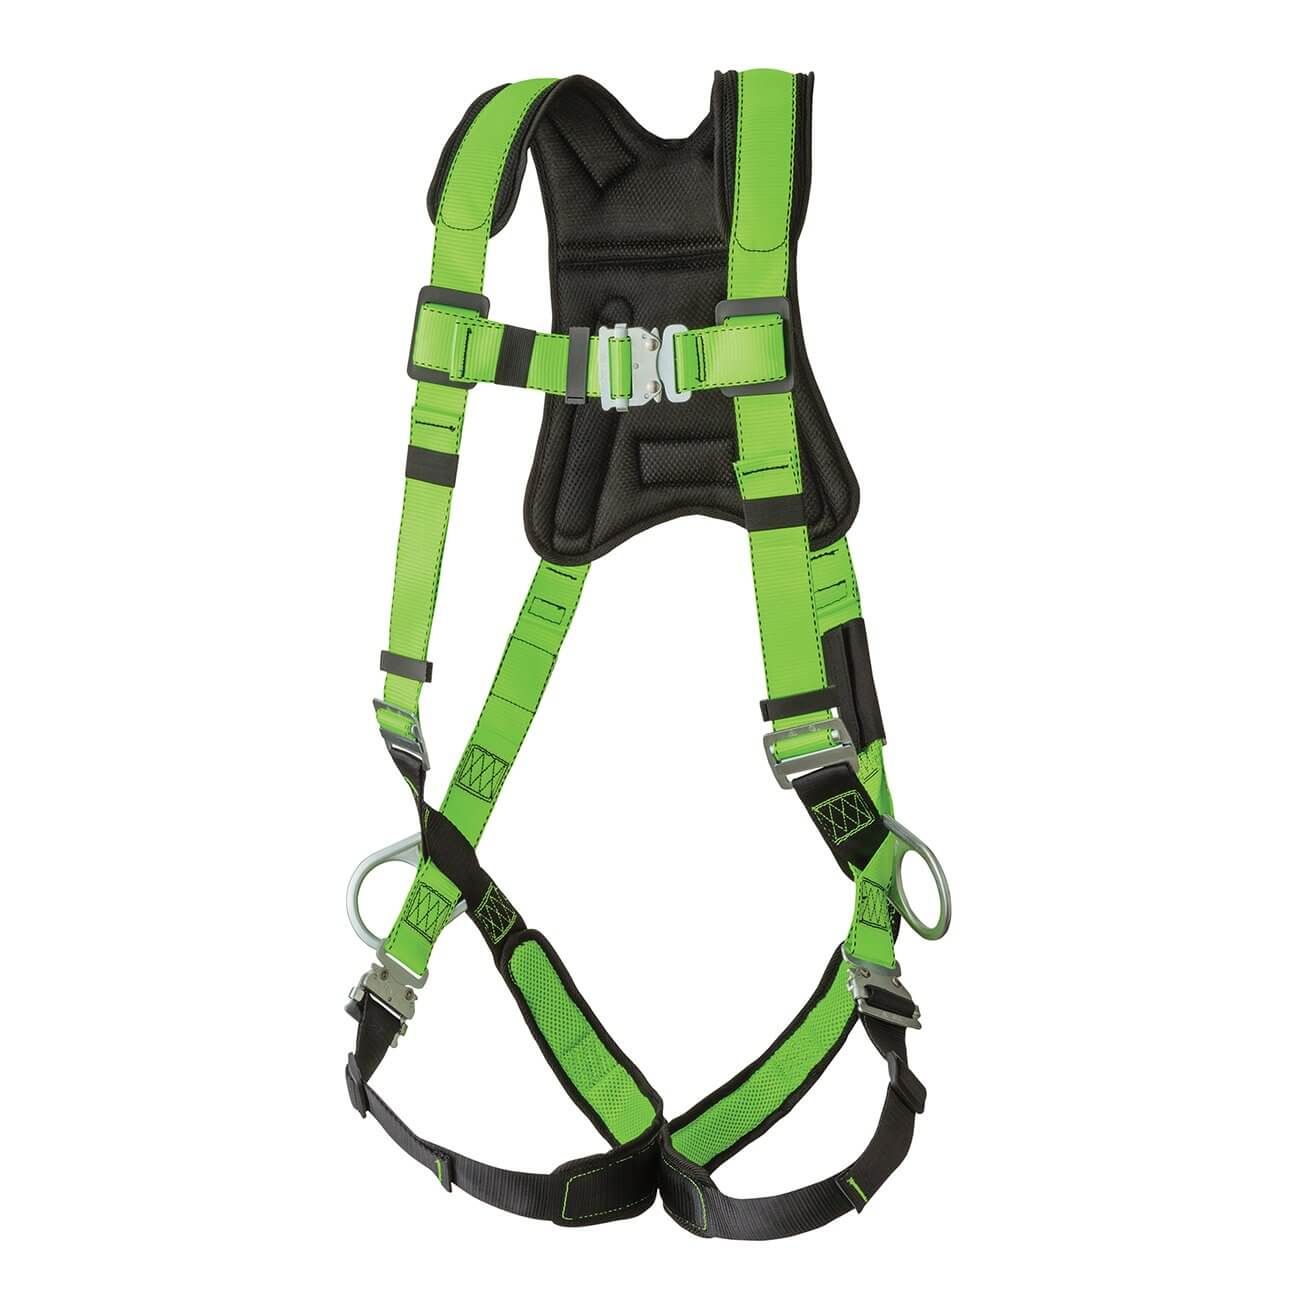 PeakWorks FBH-60110B Premium Full Body Harness - wise-line-tools